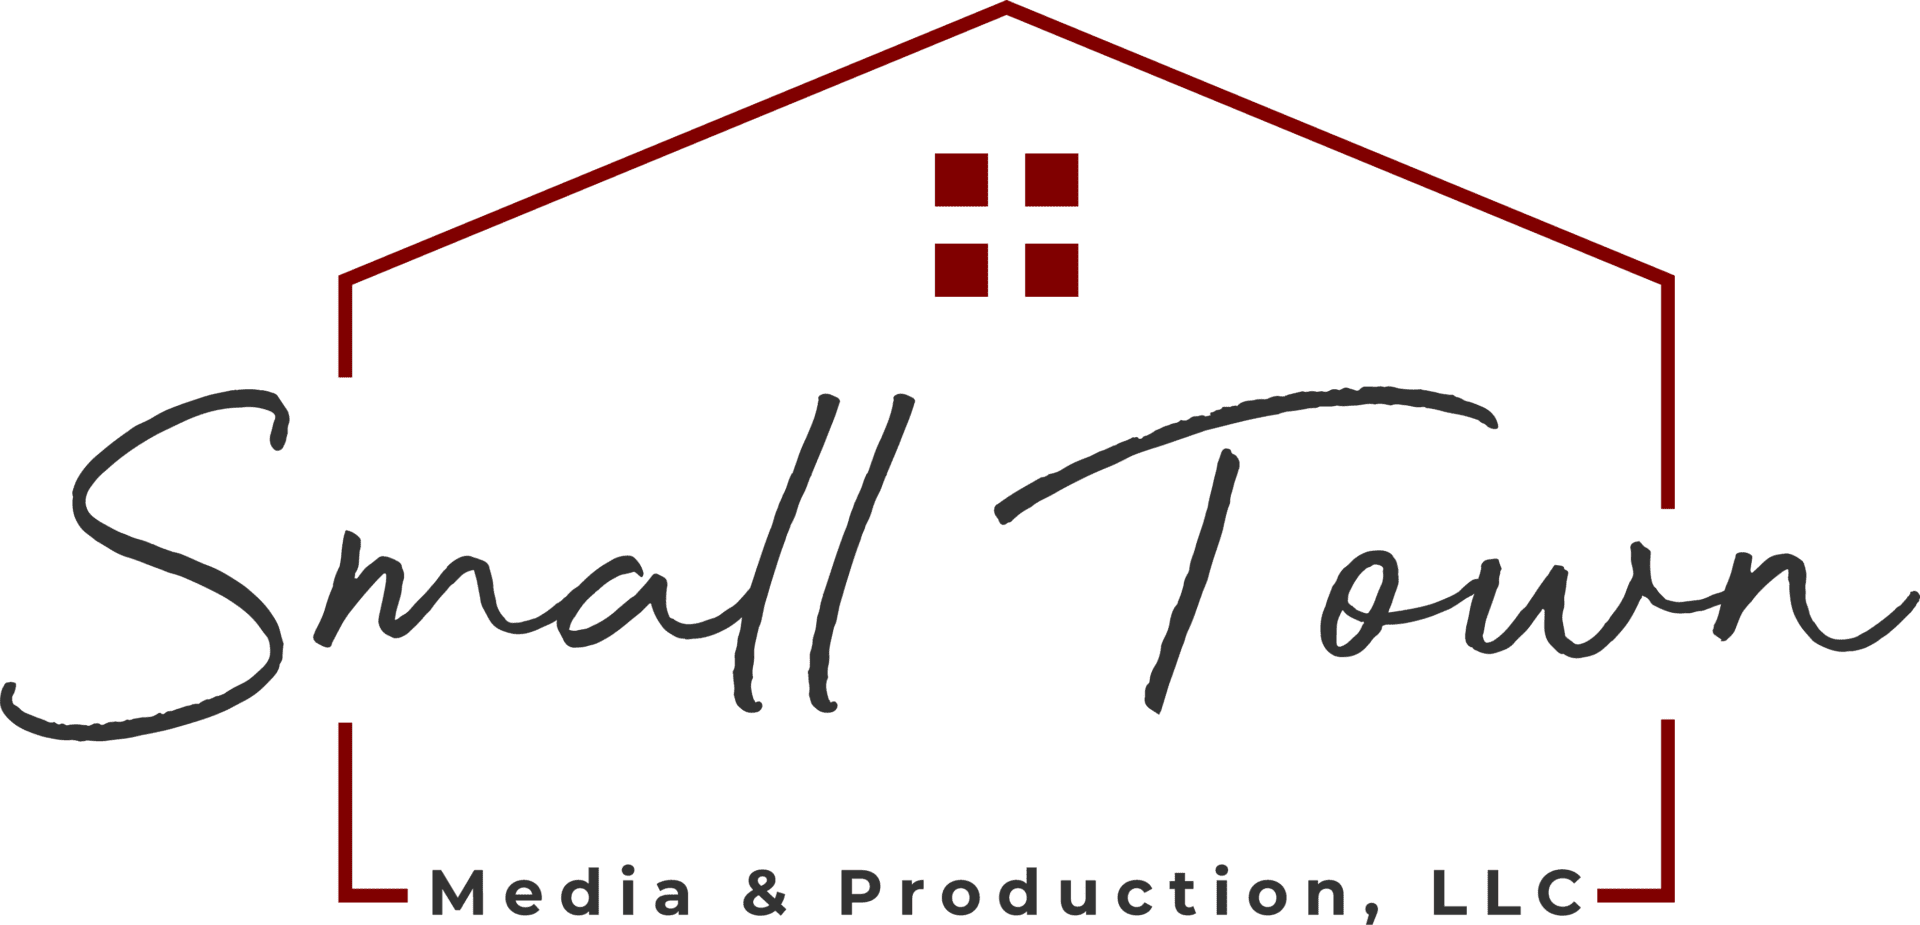 Small Town Media & Production LLC